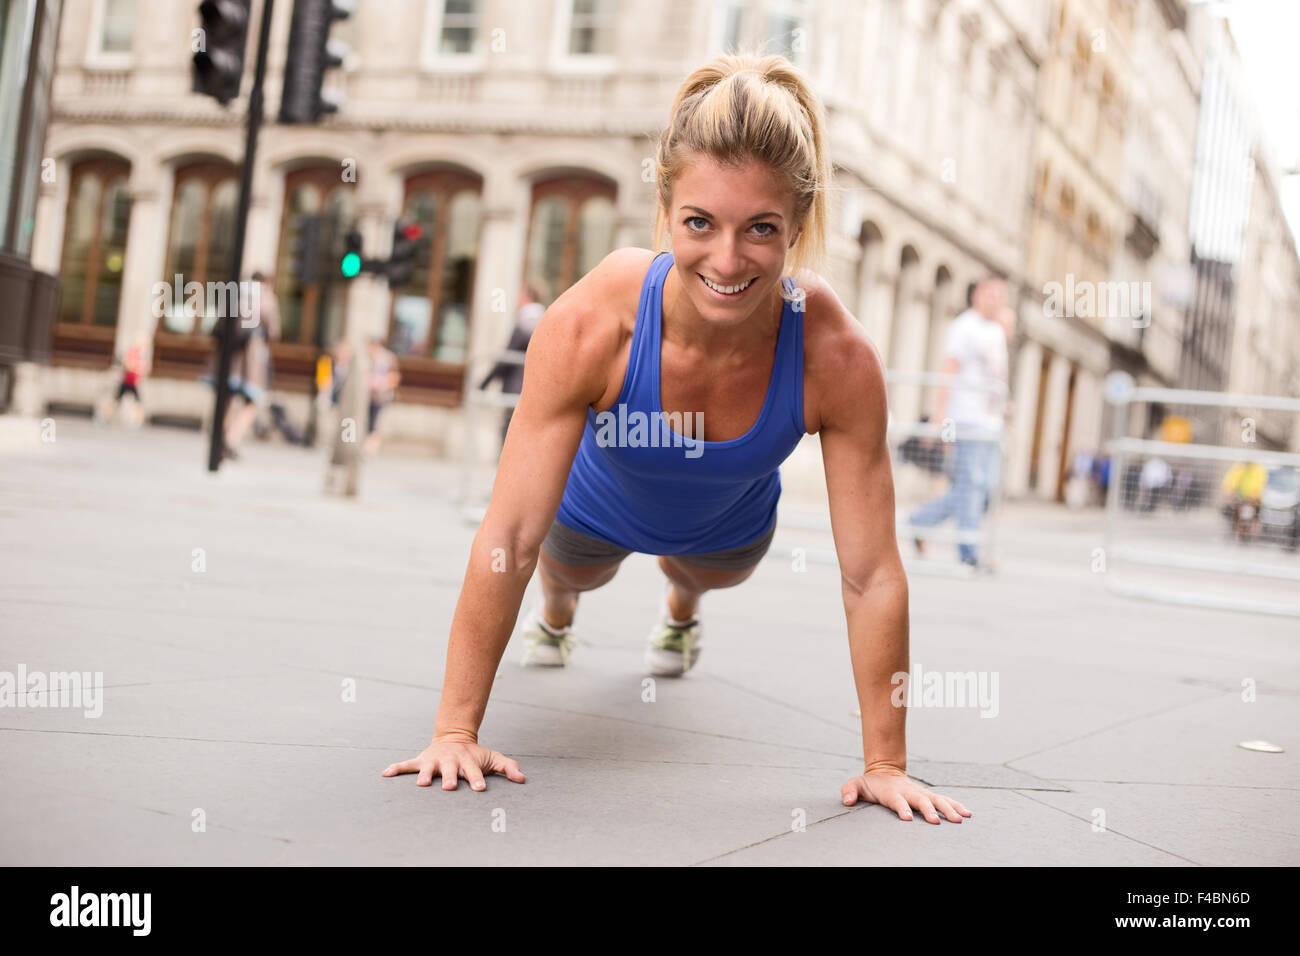 young woman doing push ups Stock Photo